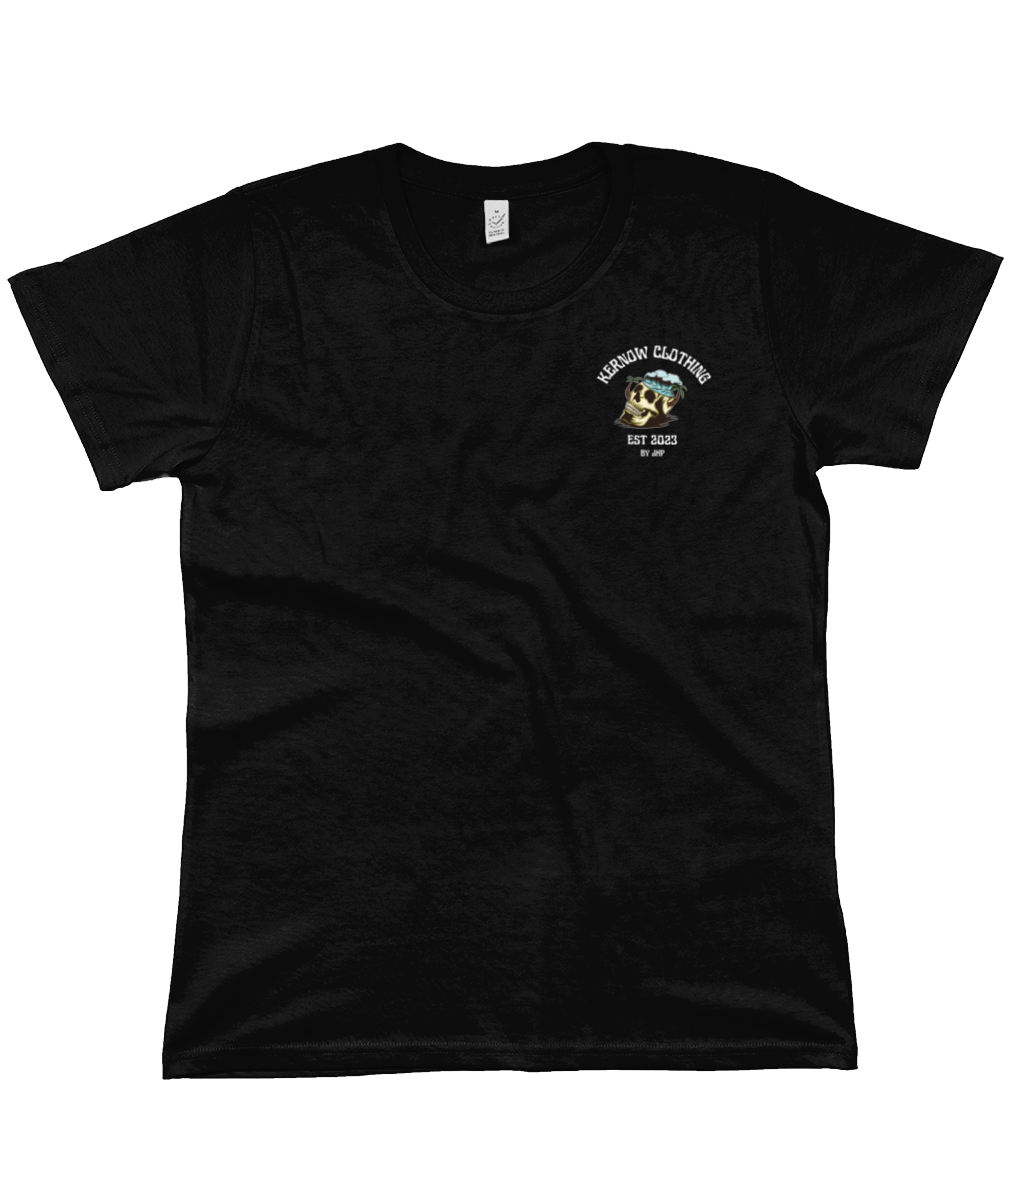 Kernow Clothing Women's T-Shirt The original Black